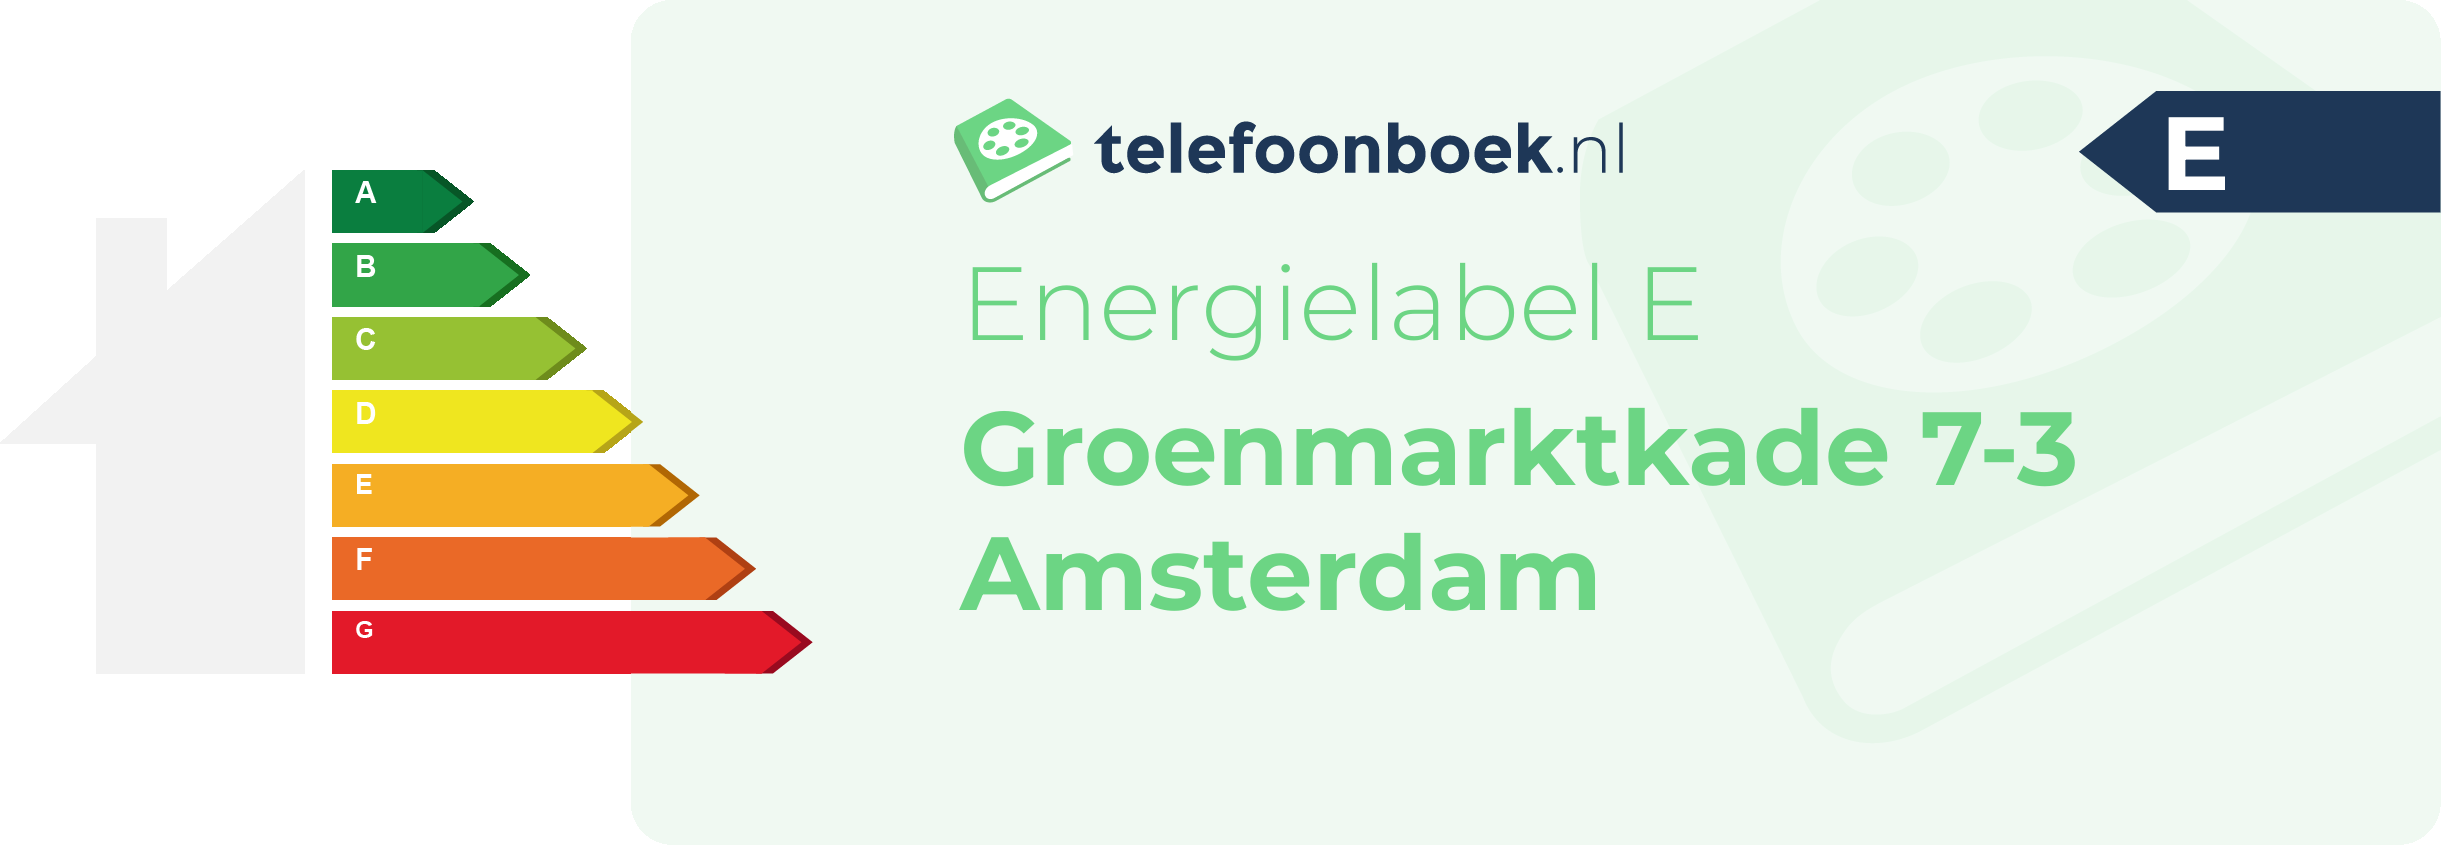 Energielabel Groenmarktkade 7-3 Amsterdam